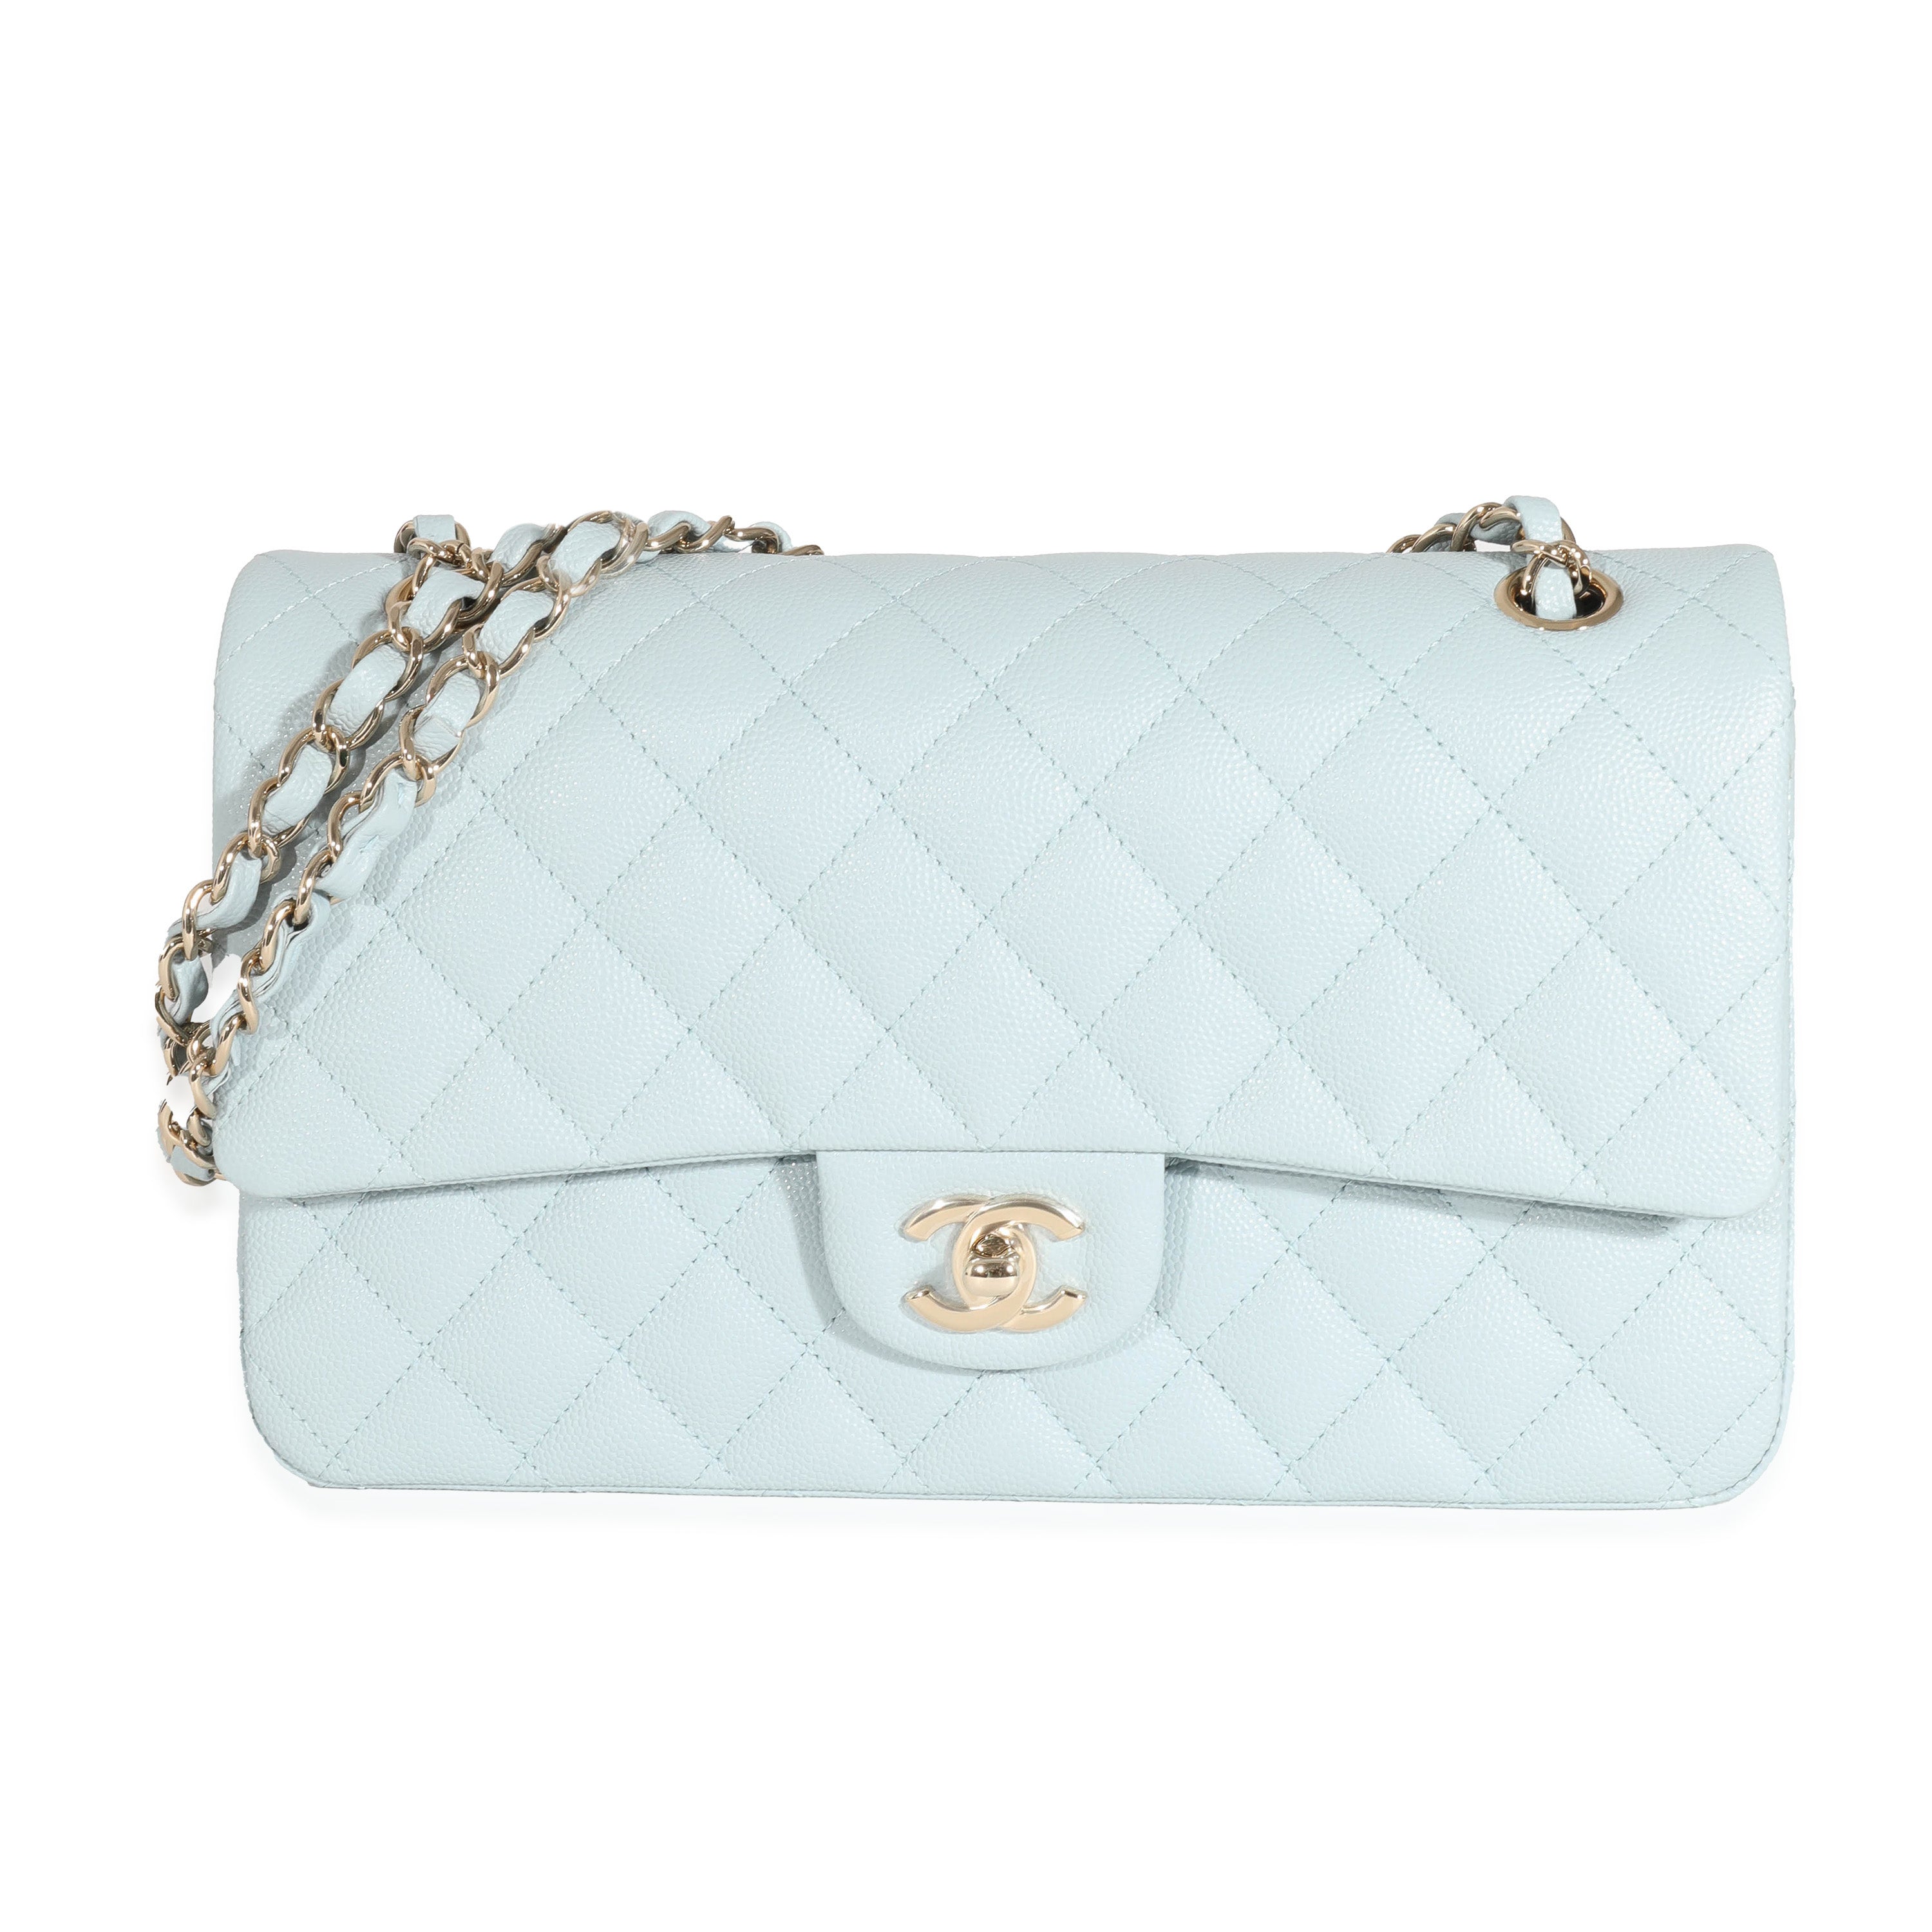 Túi Chanel Classic Medium màu xanh trời da cừu best quality